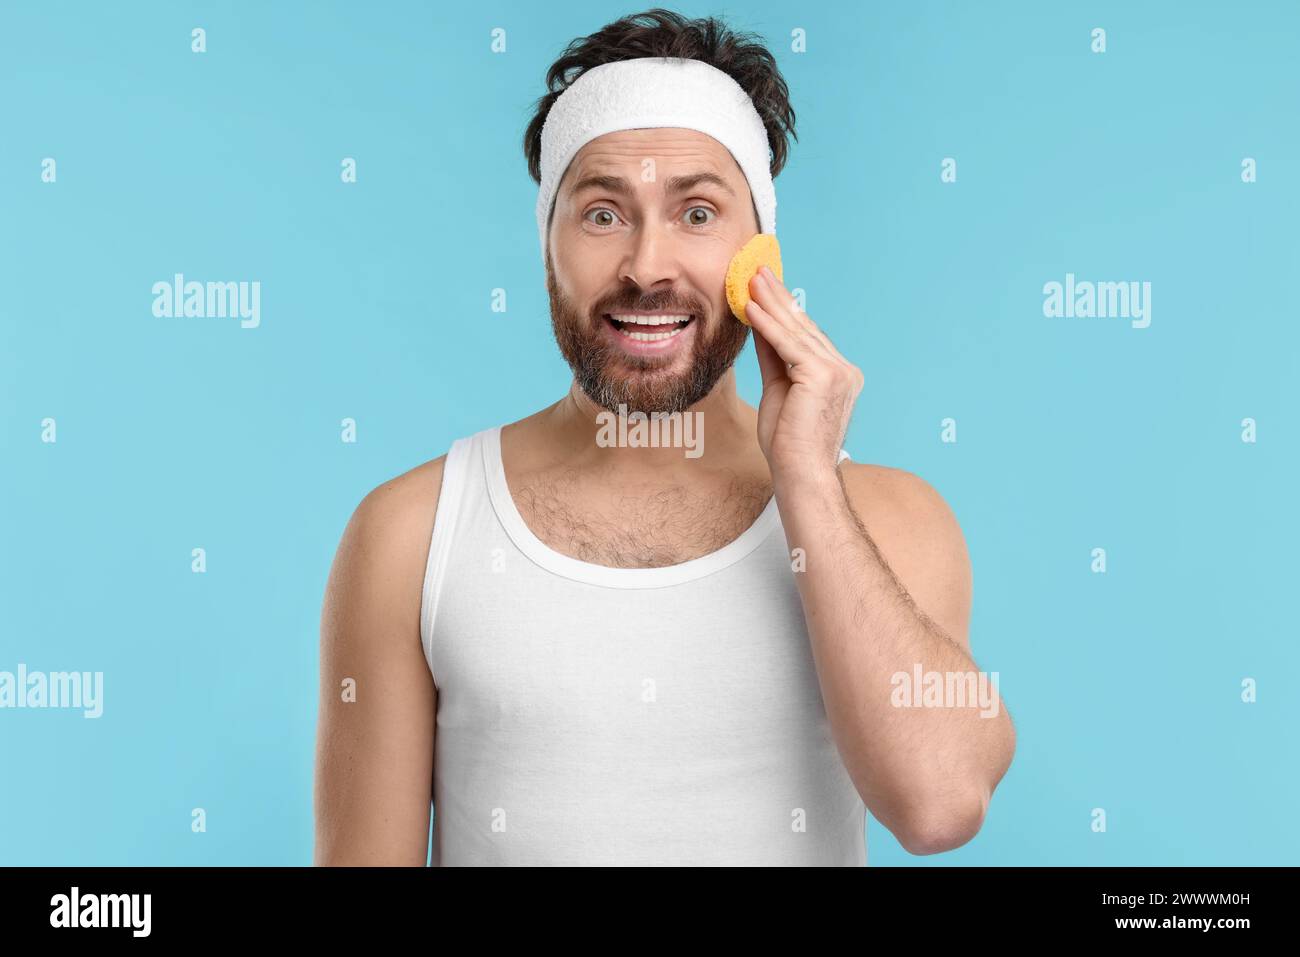 Man with headband washing his face using sponge on light blue background Stock Photo